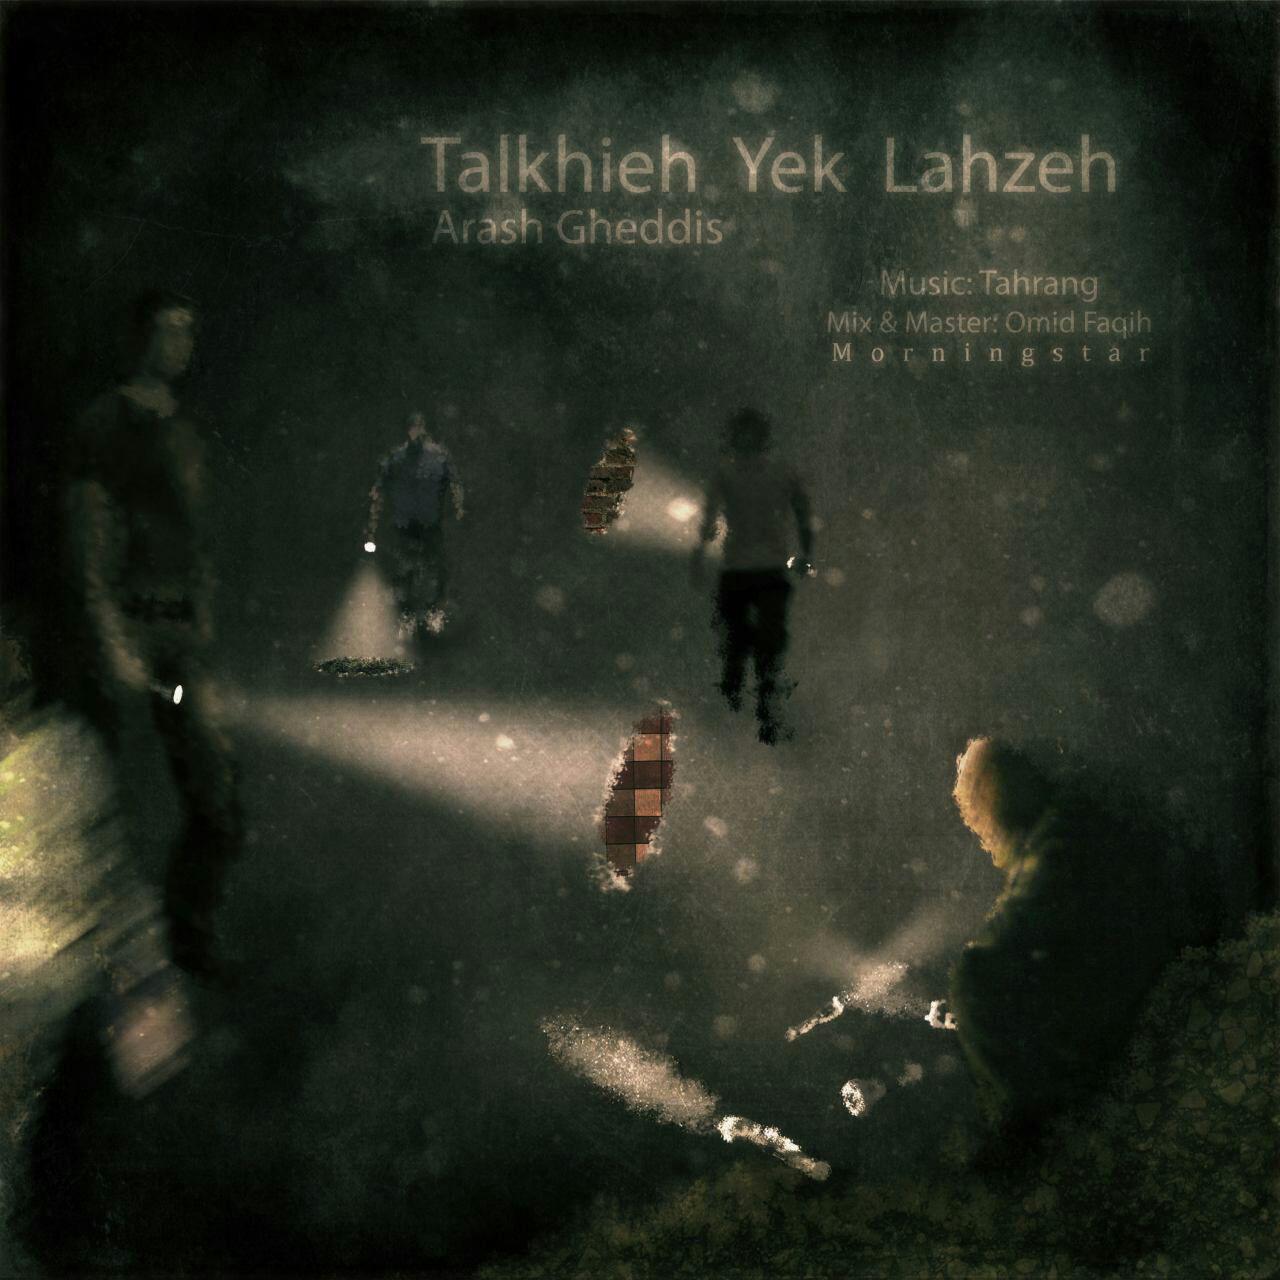 Talkhie Yek Lahzeh